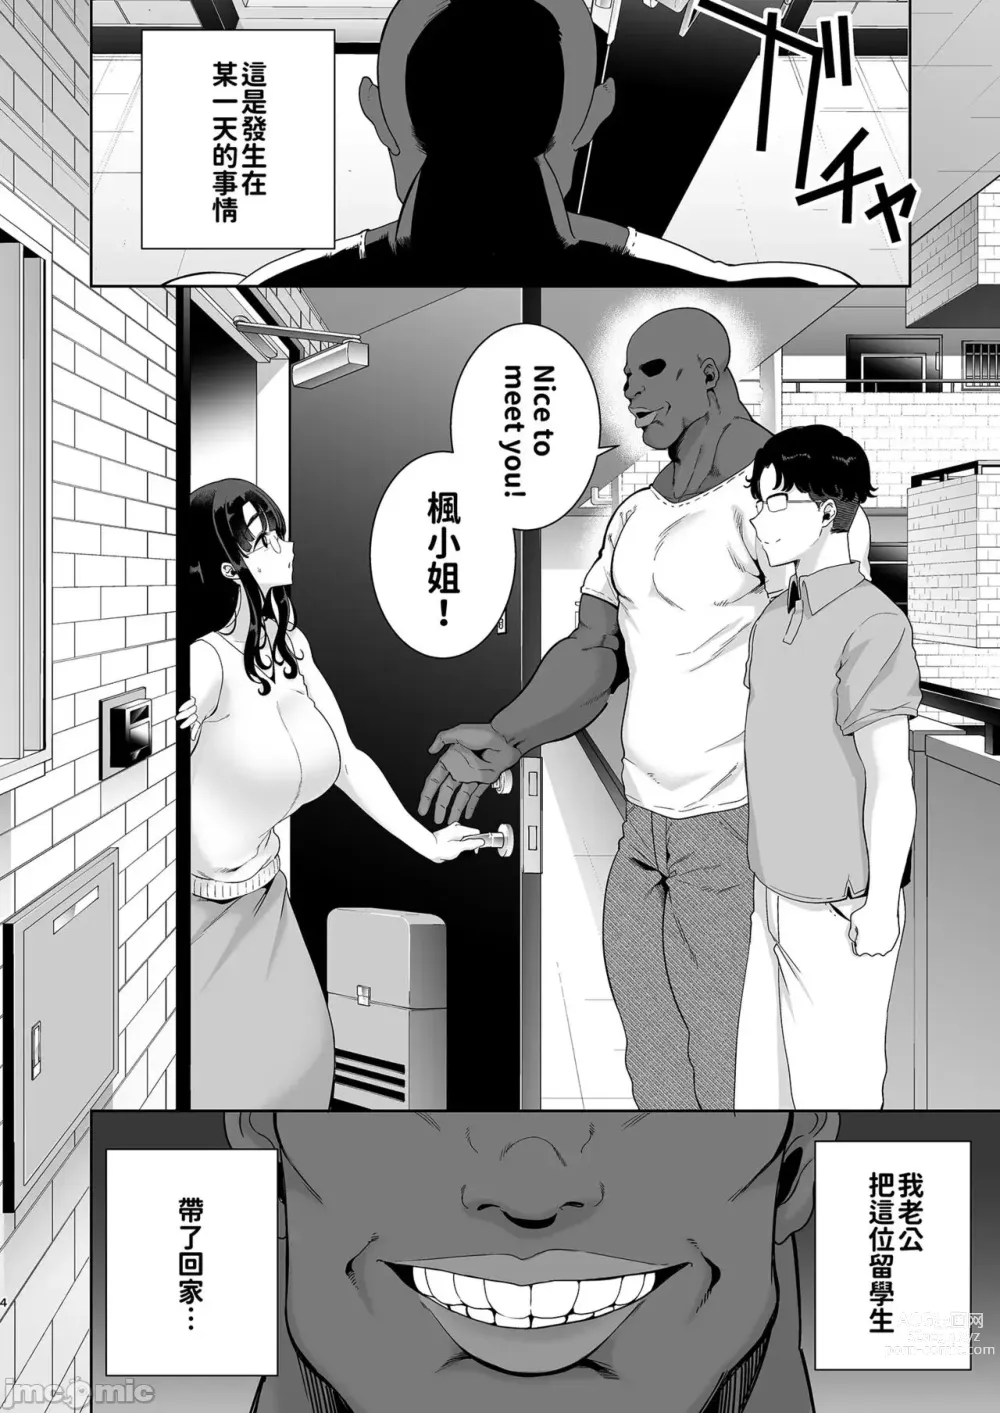 Page 4 of manga ワイルド式日本人妻の寝取り方 其ノ一&二&三&四 眼鏡あり.ver